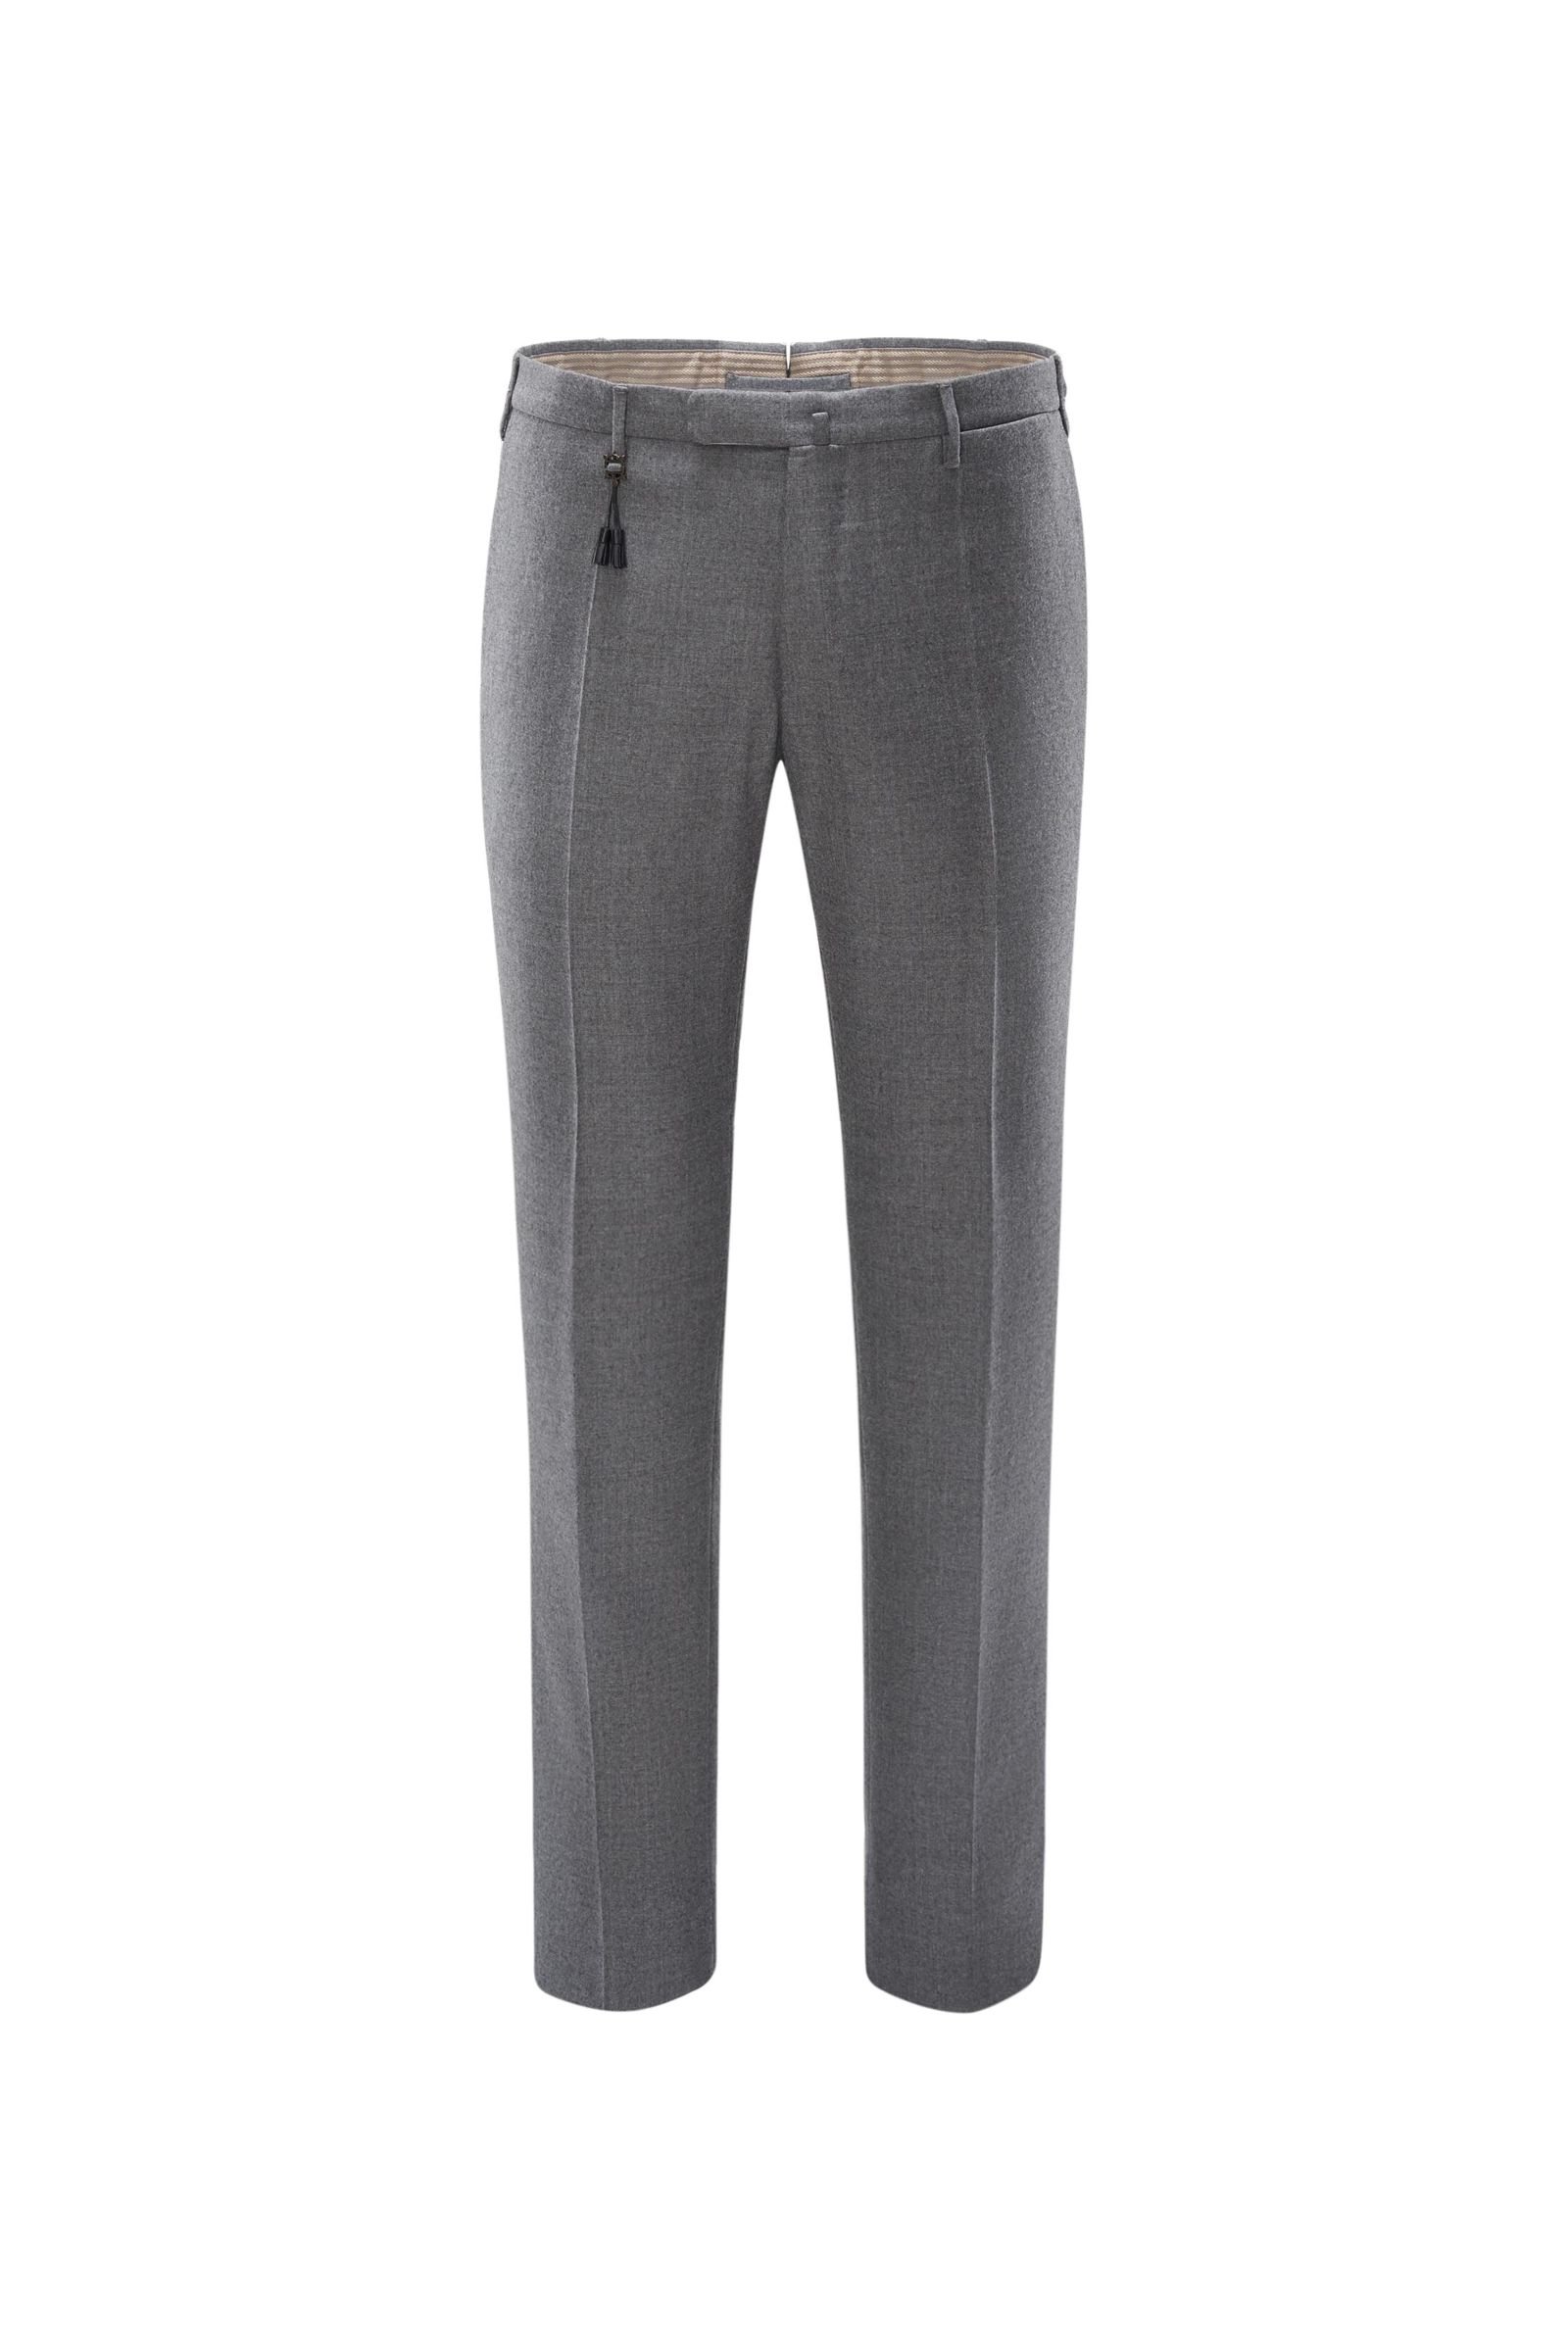 Wool trousers light grey